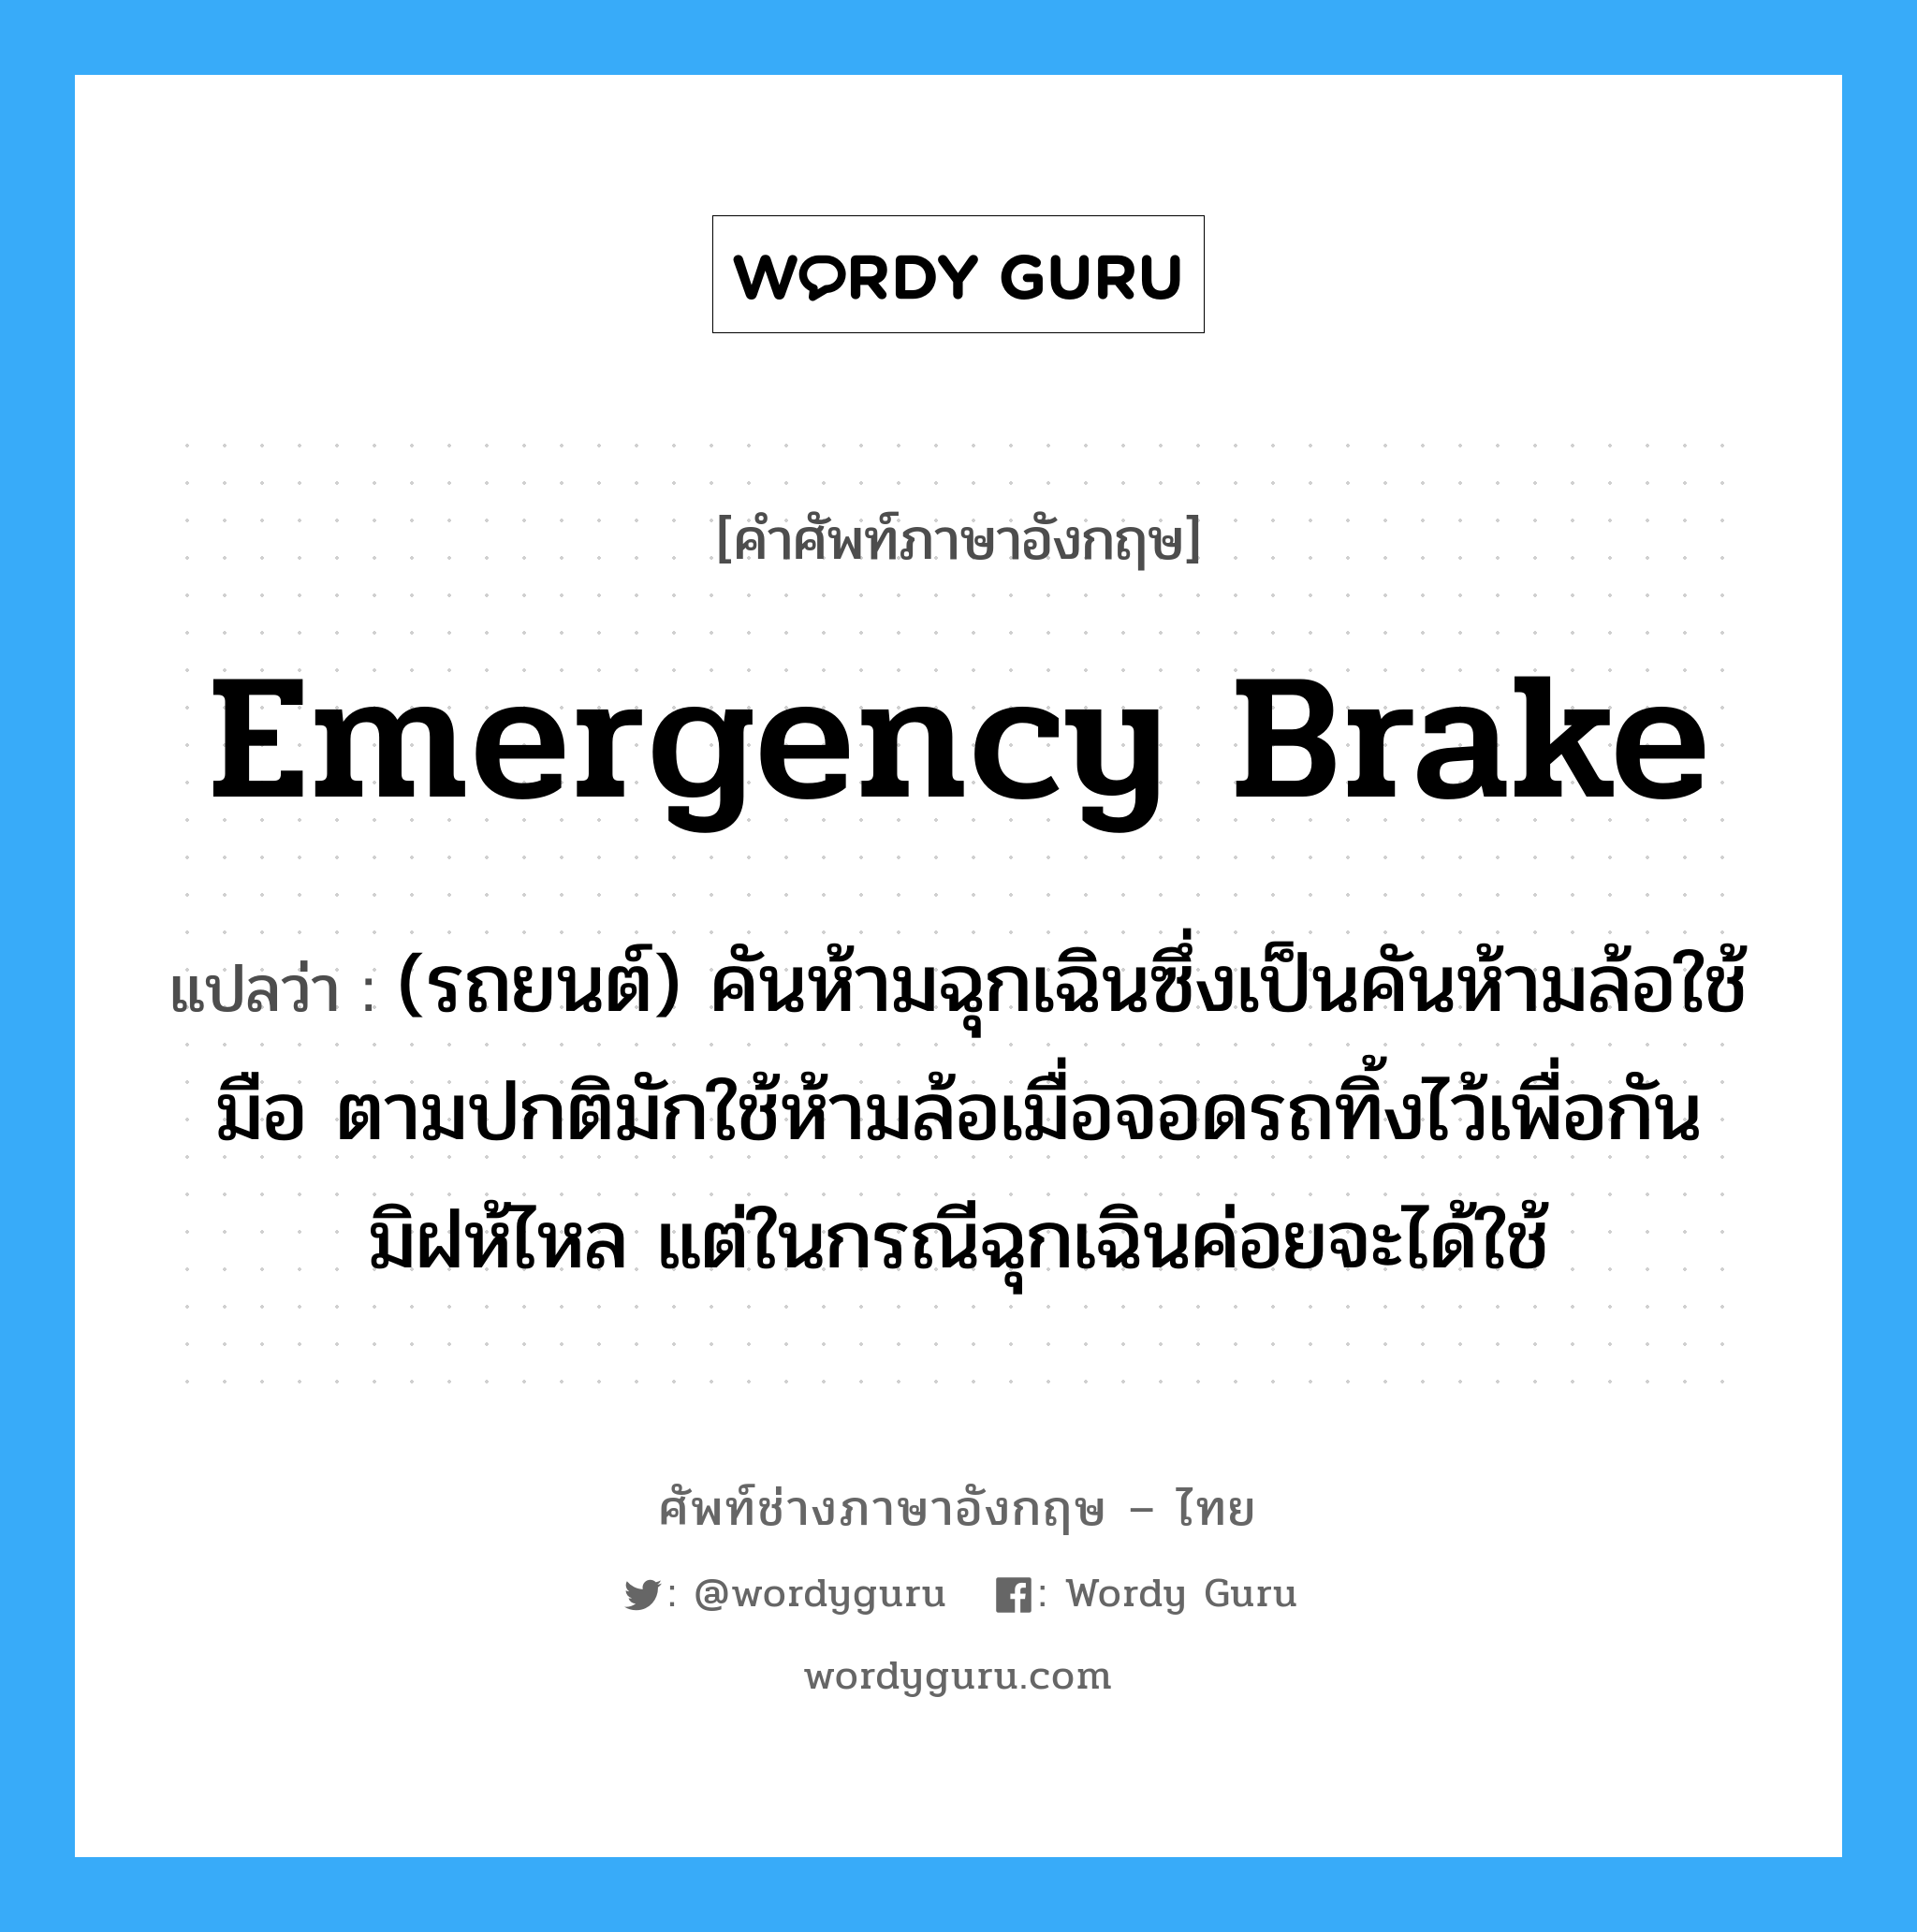 emergency brake แปลว่า?, คำศัพท์ช่างภาษาอังกฤษ - ไทย emergency brake คำศัพท์ภาษาอังกฤษ emergency brake แปลว่า (รถยนต์) คันห้ามฉุกเฉินซึ่งเป็นคันห้ามล้อใช้มือ ตามปกติมักใช้ห้ามล้อเมื่อจอดรถทิ้งไว้เพื่อกันมิฝห้ไหล แต่ในกรณีฉุกเฉินค่อยจะได้ใช้